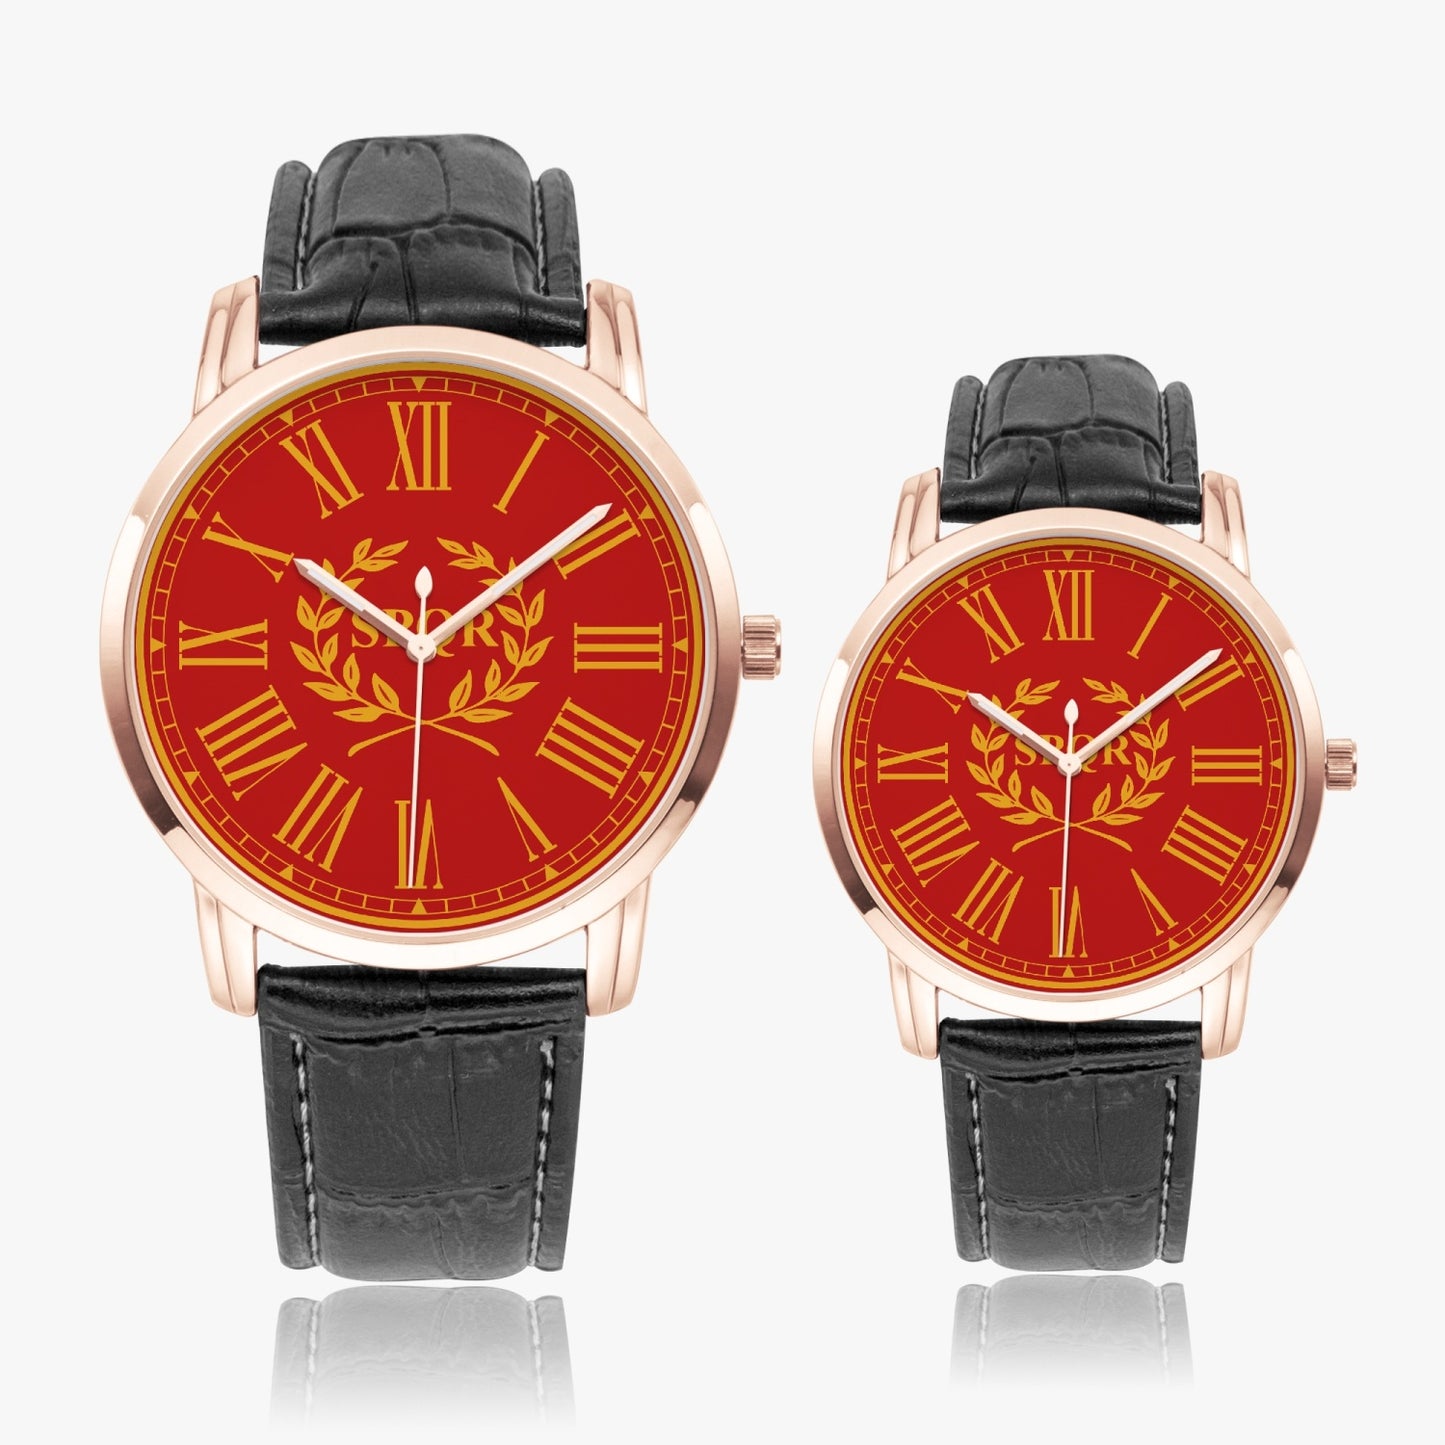 Quartz watch - SPQR